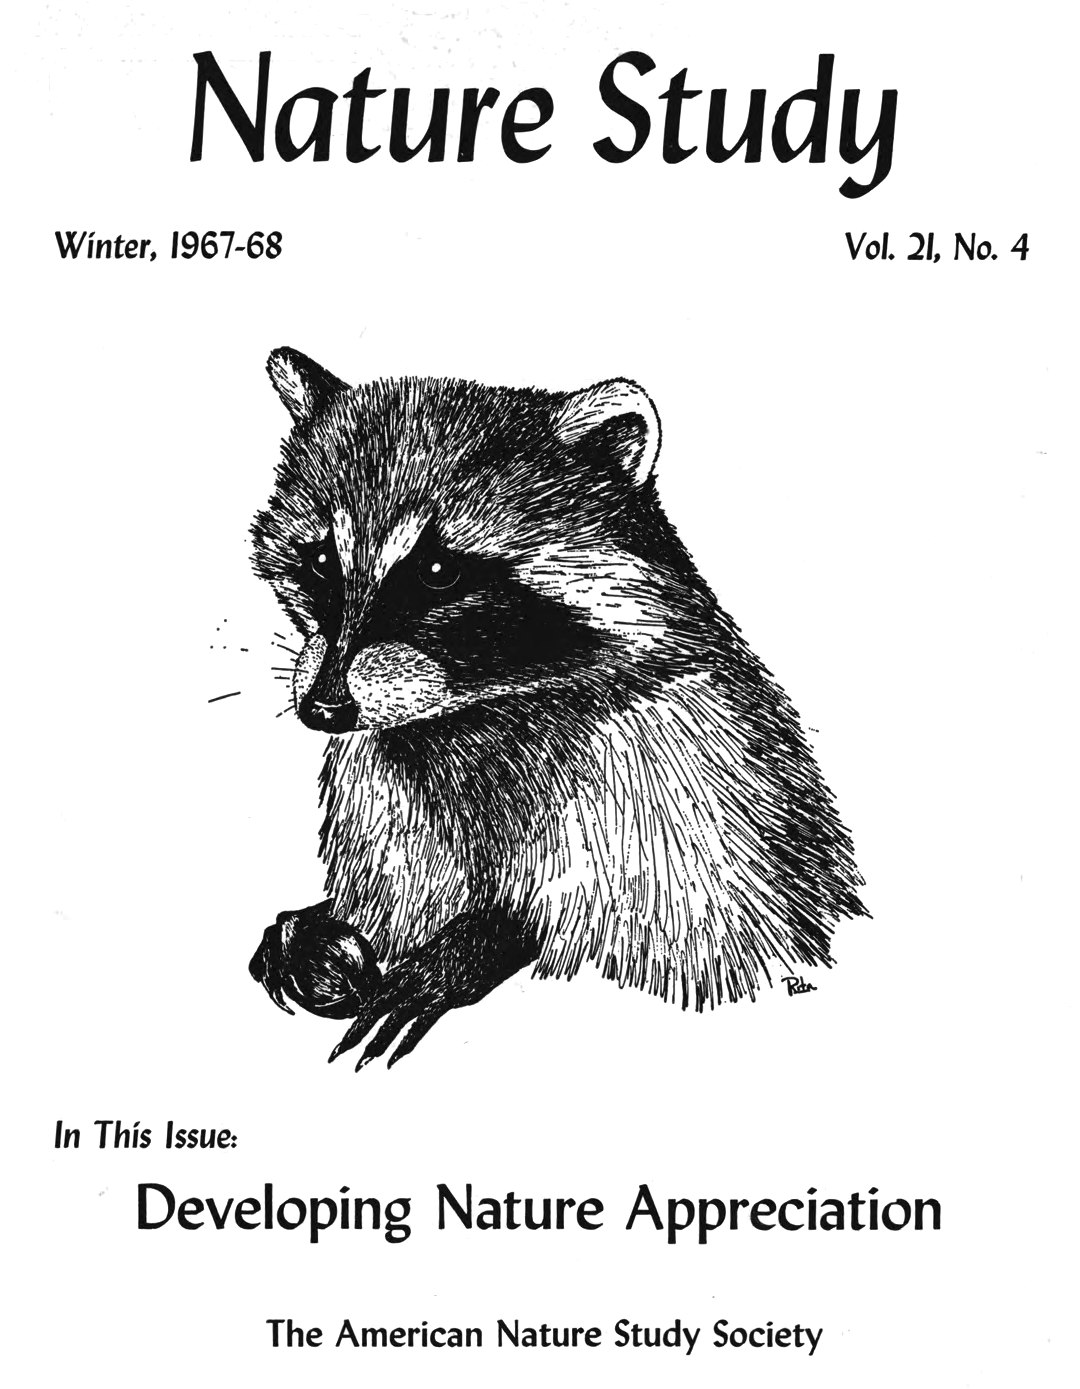 Nature Study Journal Winter 1967-68